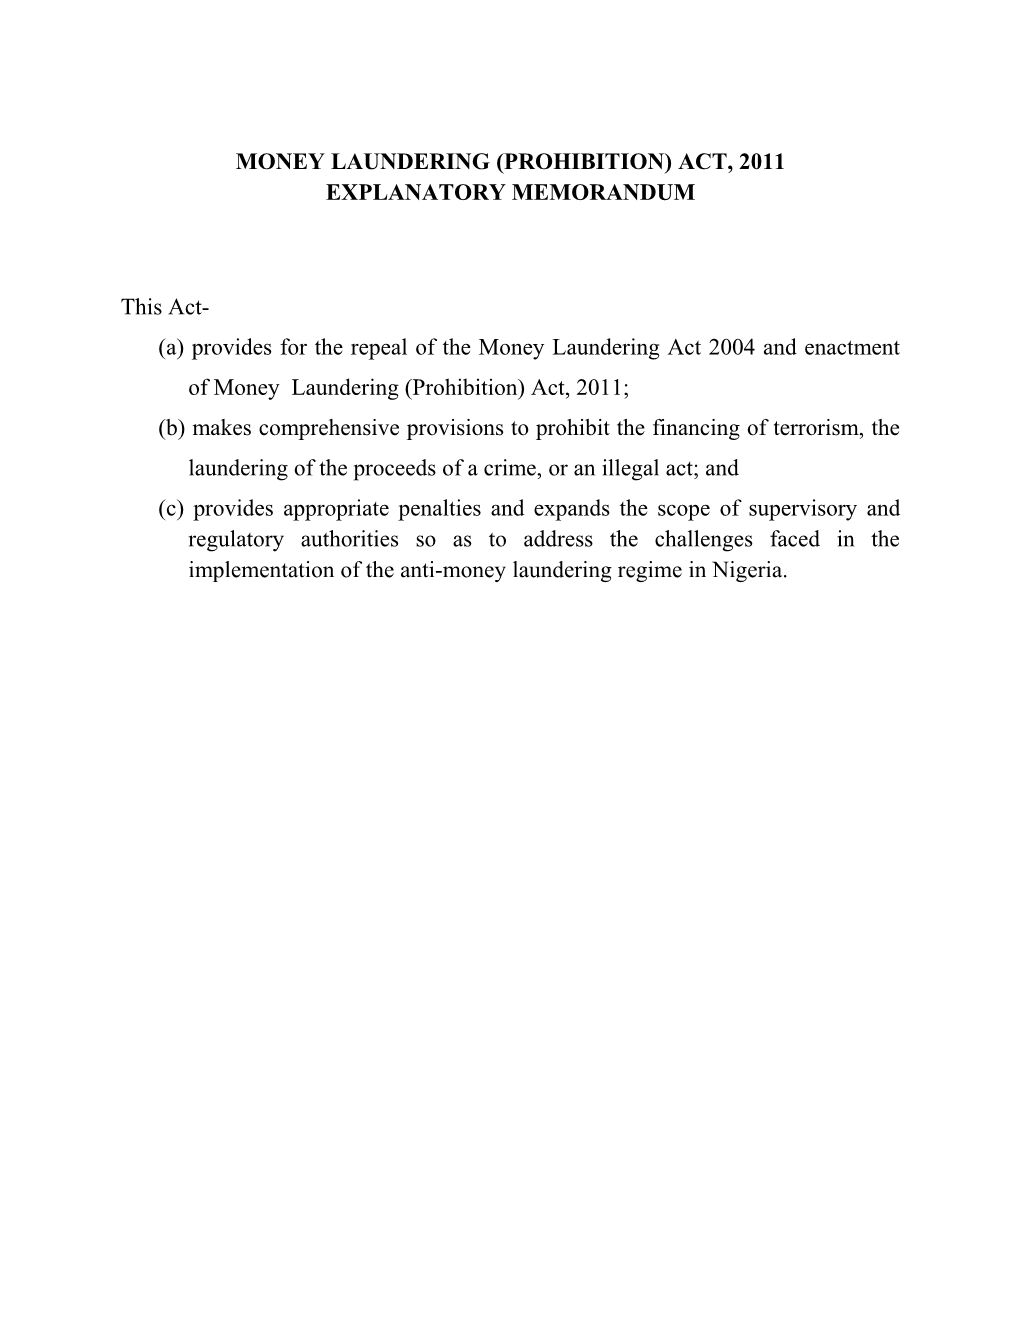 Money Laundering (Prohibition) Act, 2011